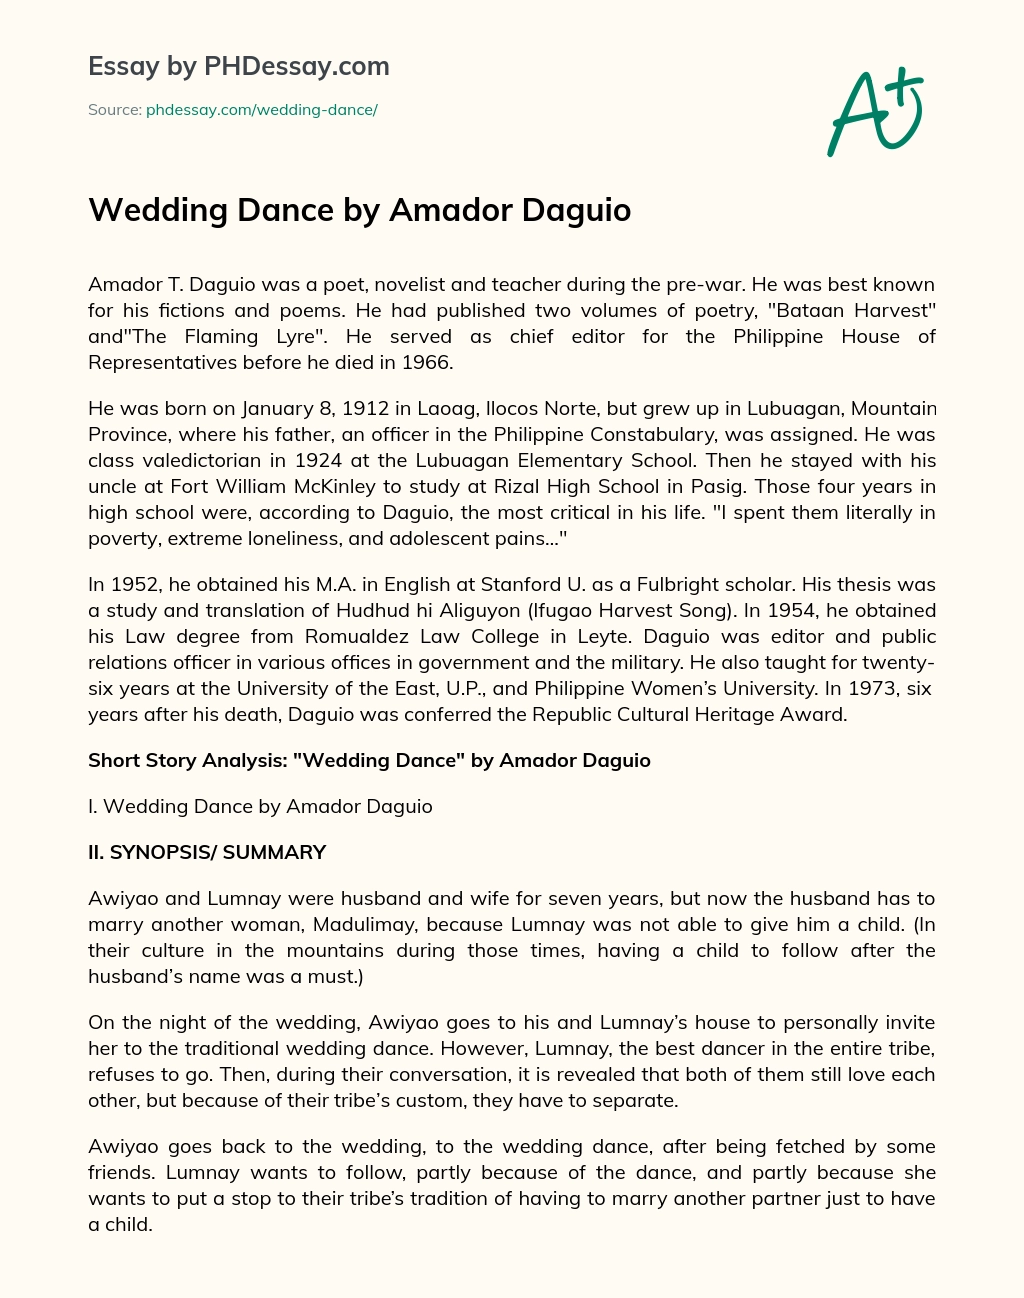 Wedding Dance by Amador Daguio essay